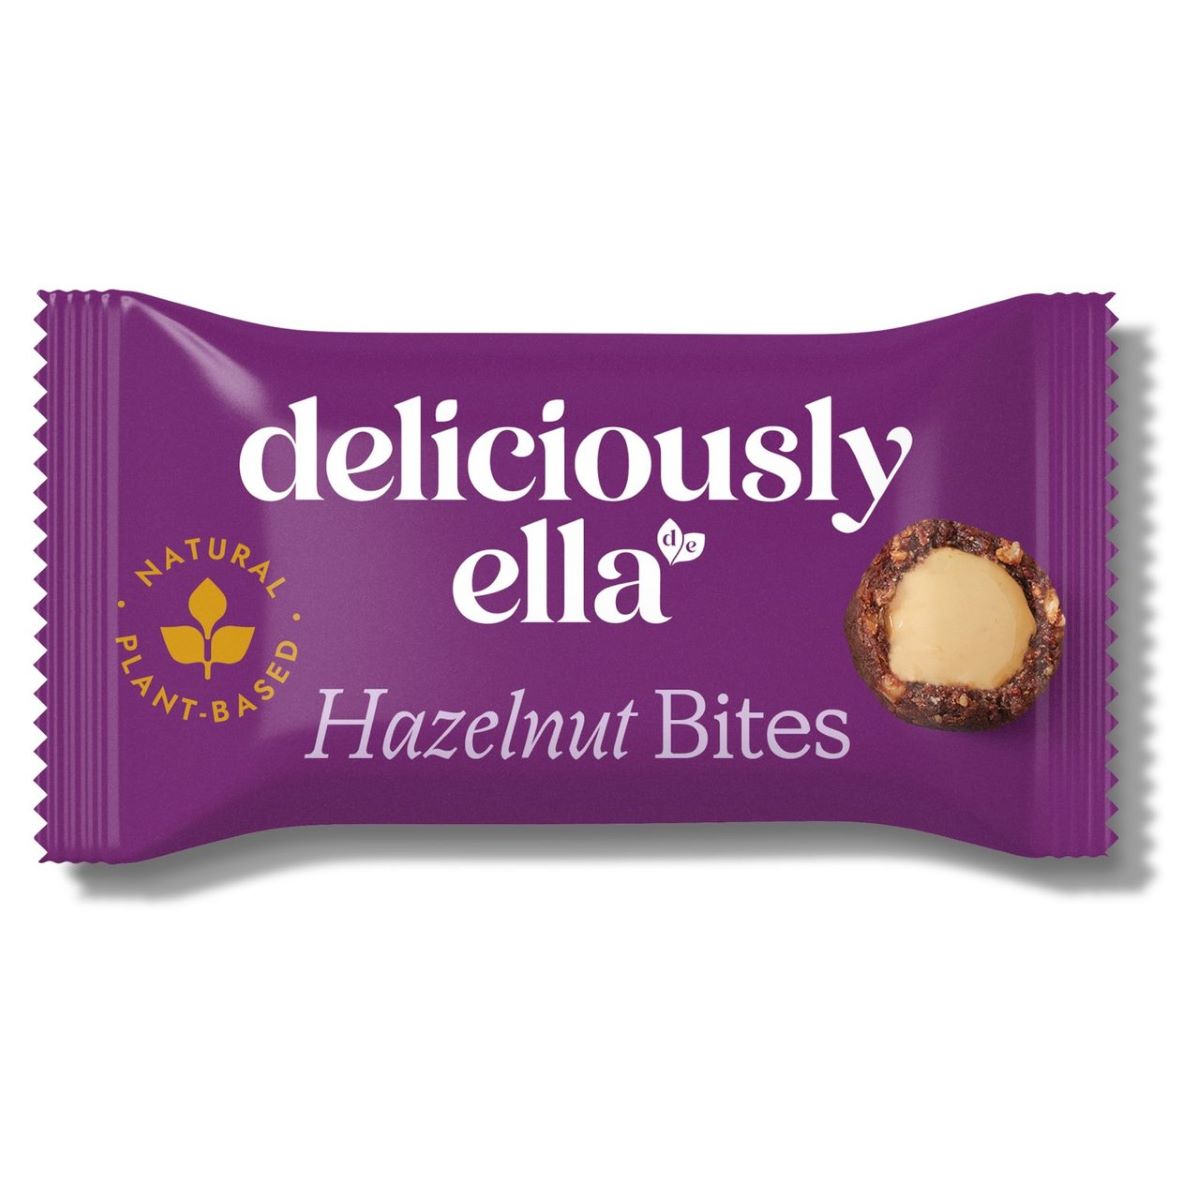 Deliciously Ella hazelnut bites